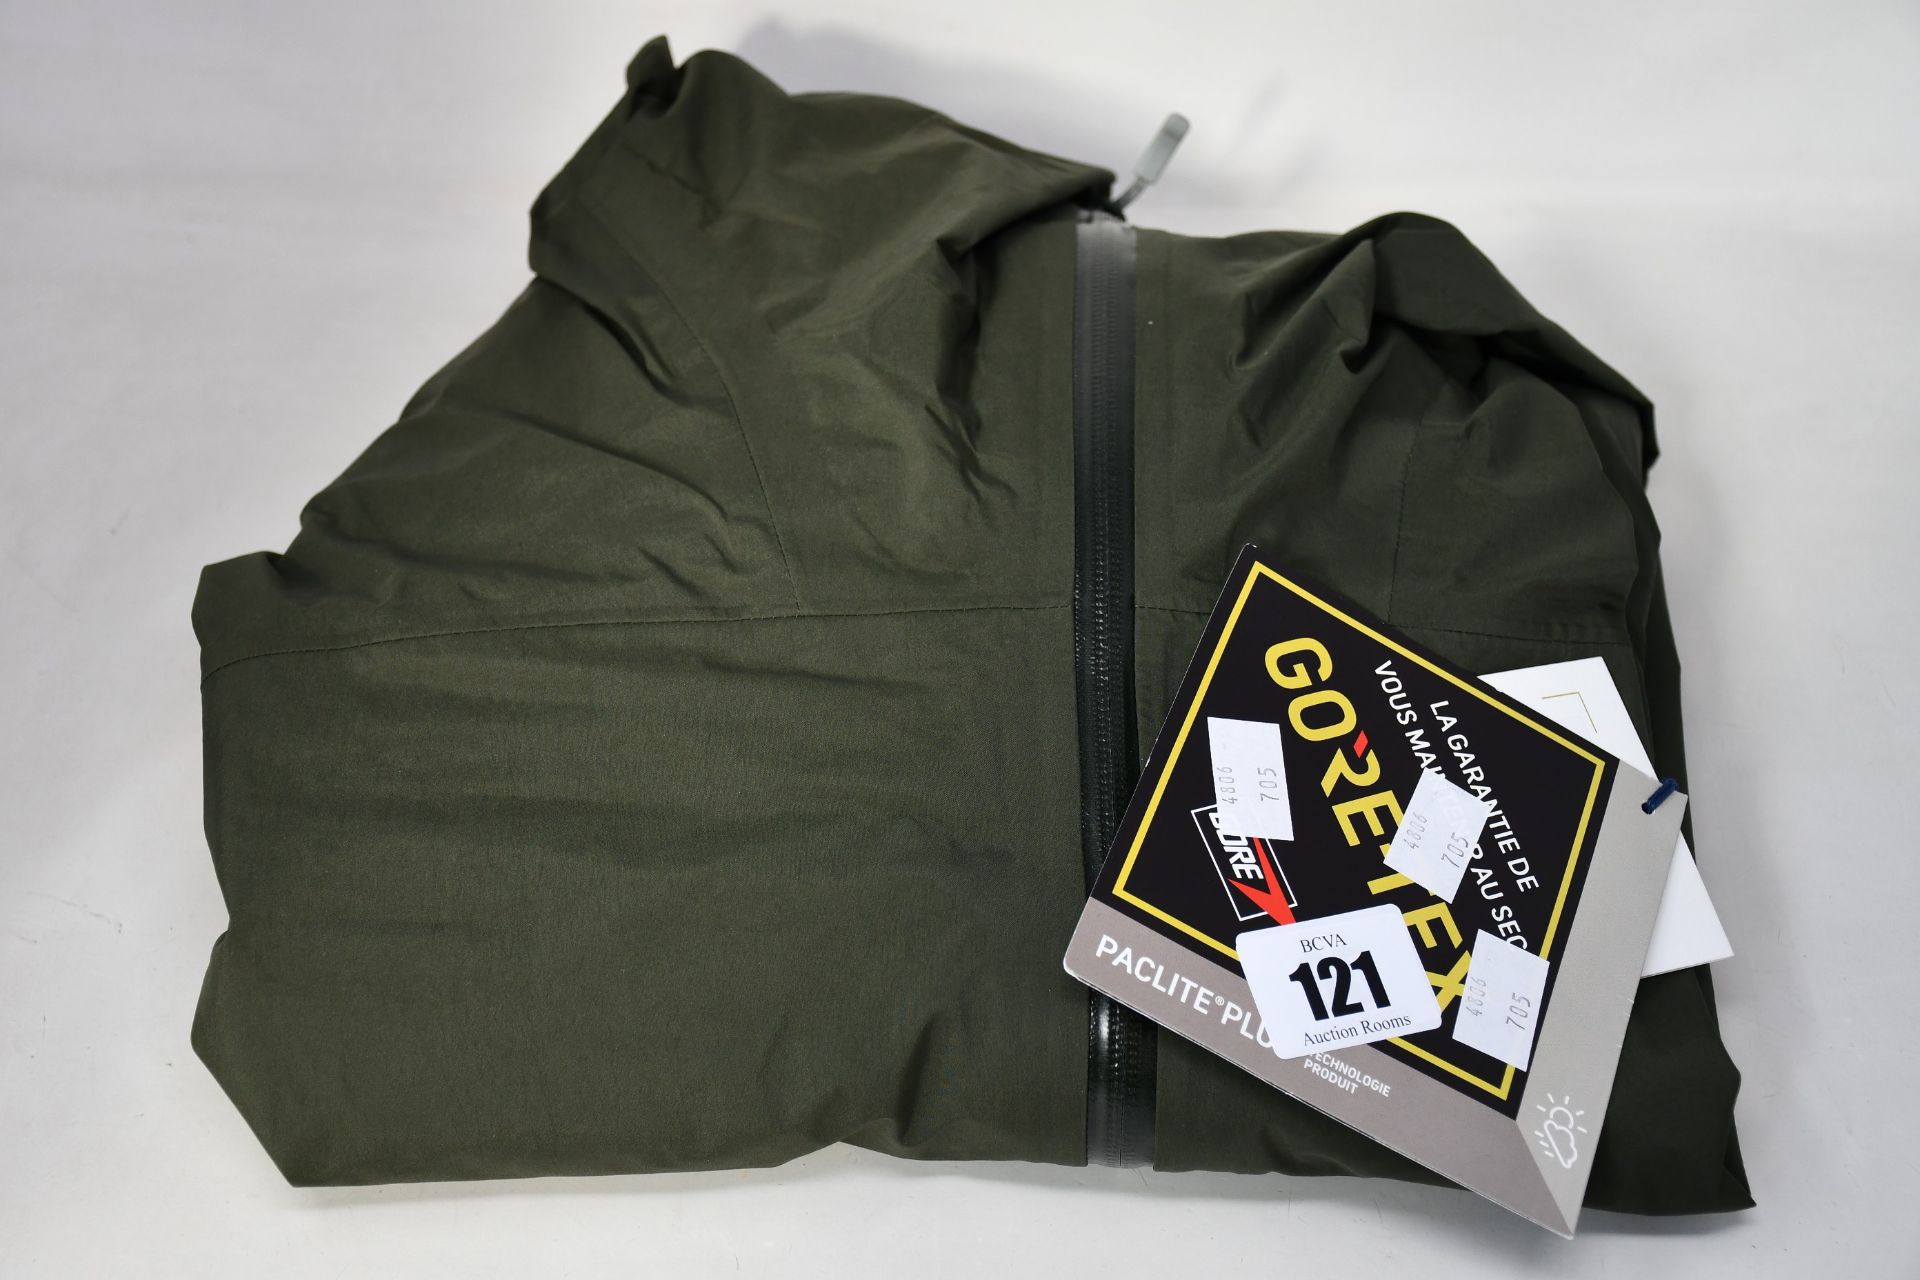 An as new Rab Meridian jacket (XXL - RRP £220).